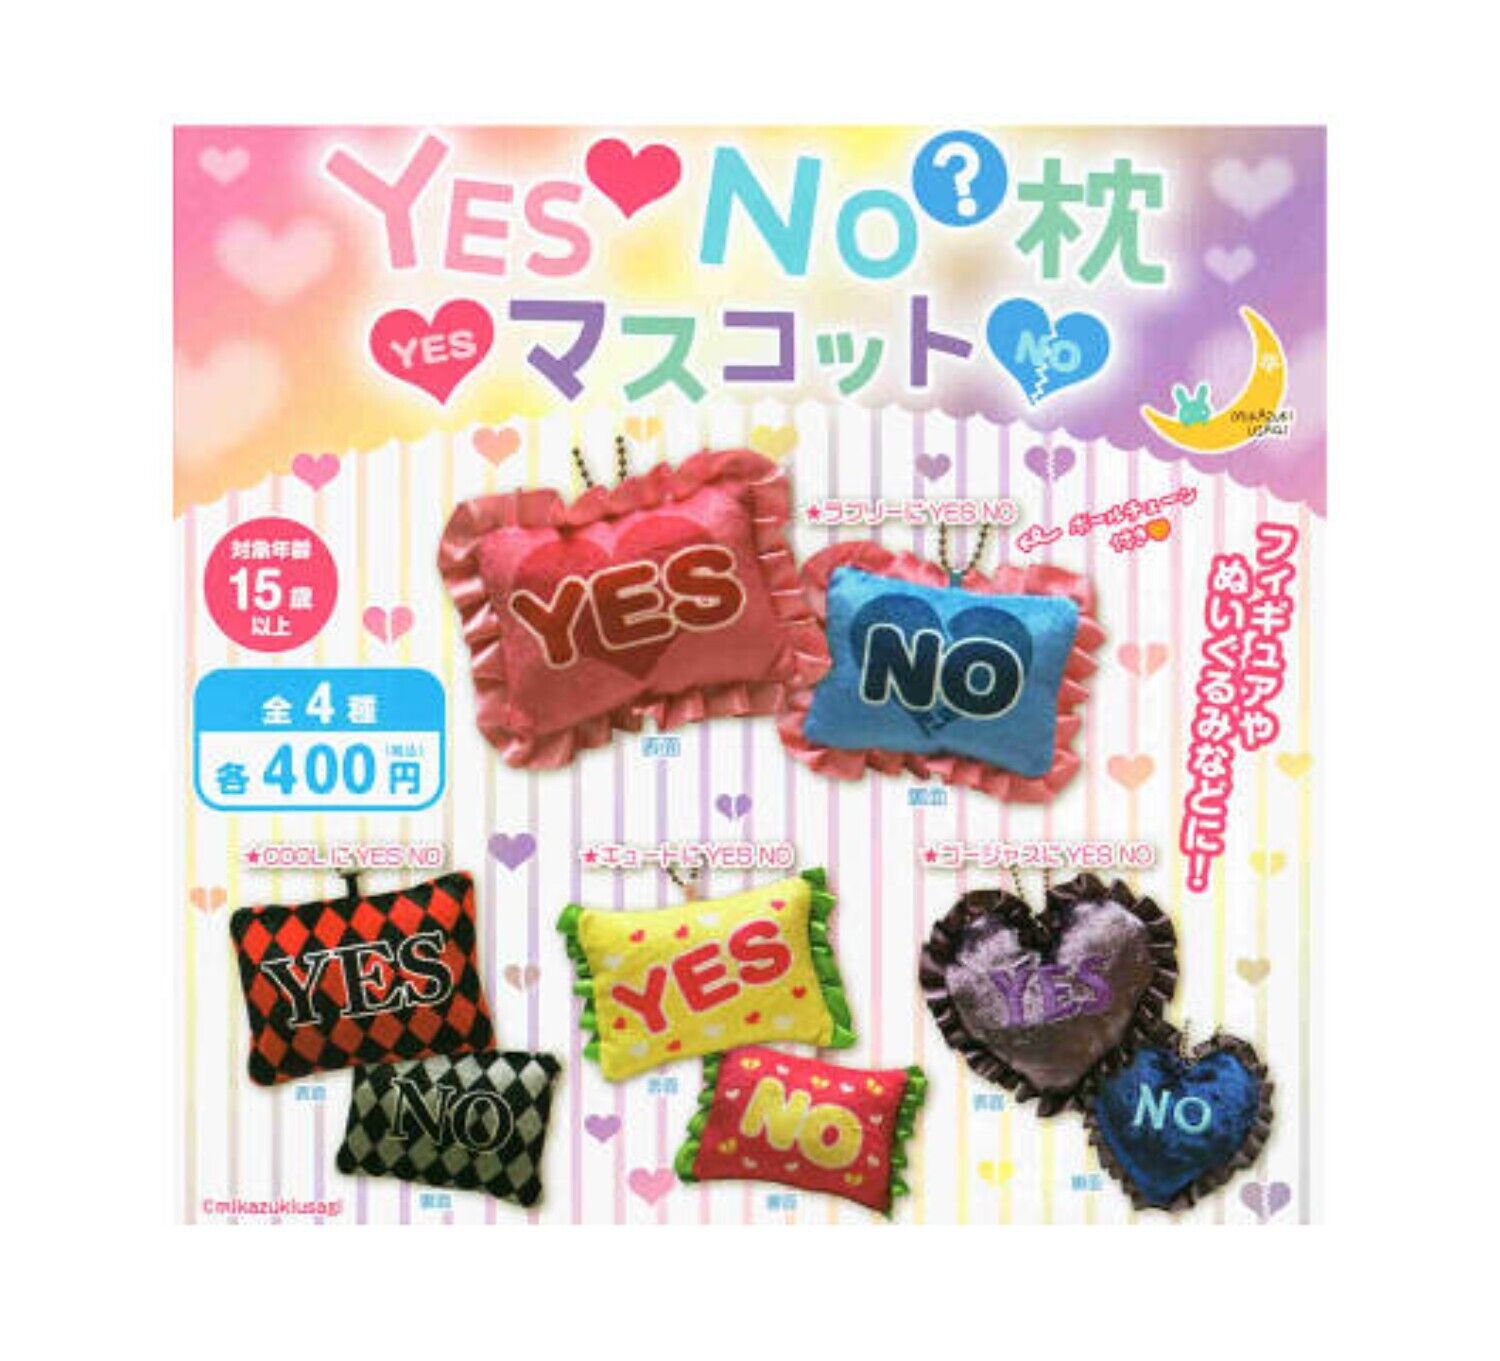 YES NO? pillow Mascot Returns Capsule Toy 4 Types Full Comp Set Gacha New Japan